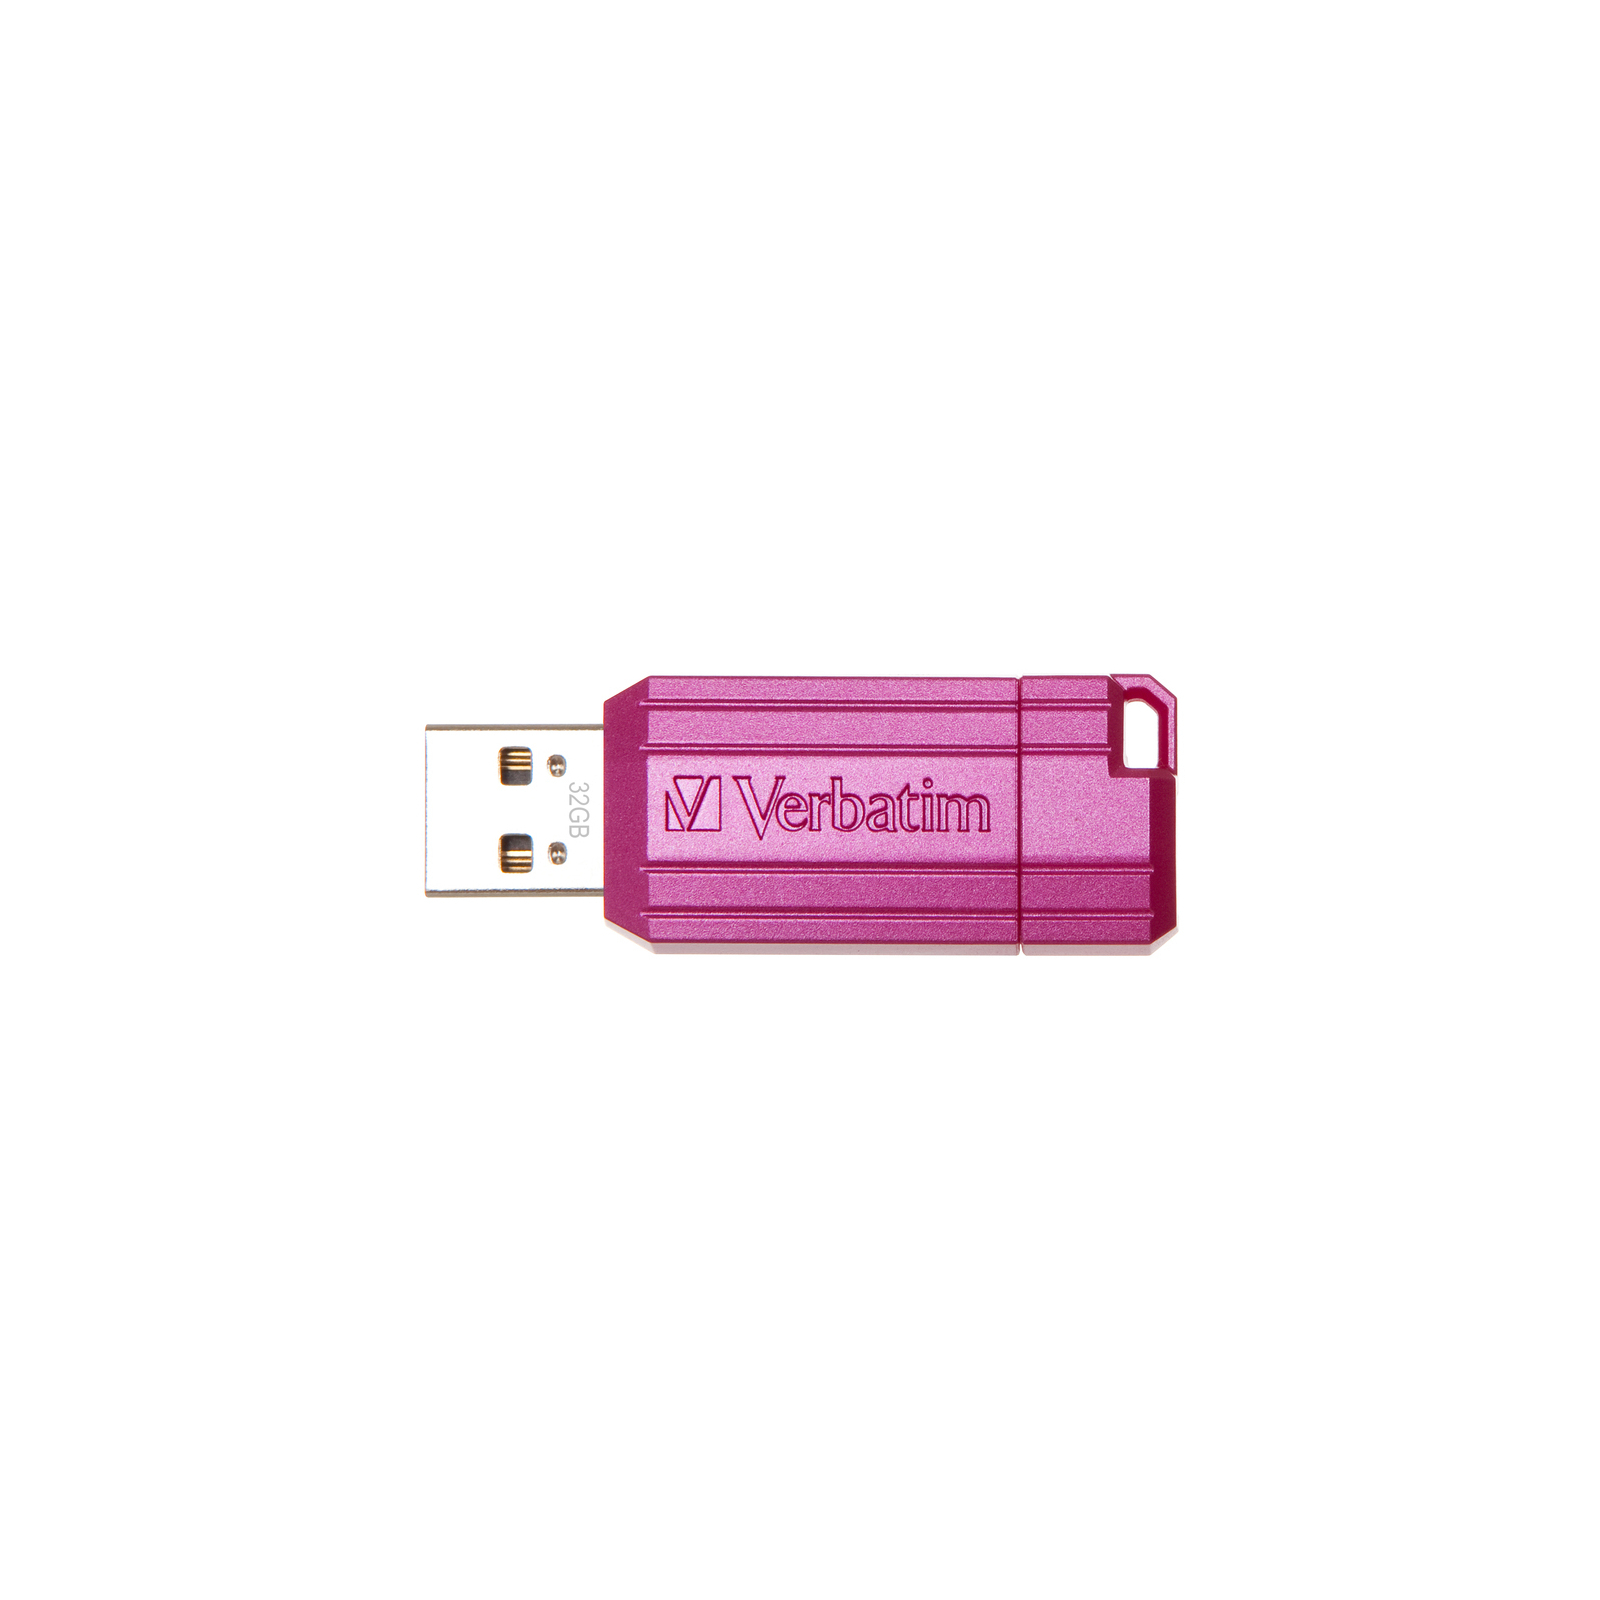 USB флеш накопитель Verbatim 32GB STORE'N'GO PIN STRIPE PINK USB 2.0 (49056) изображение 2